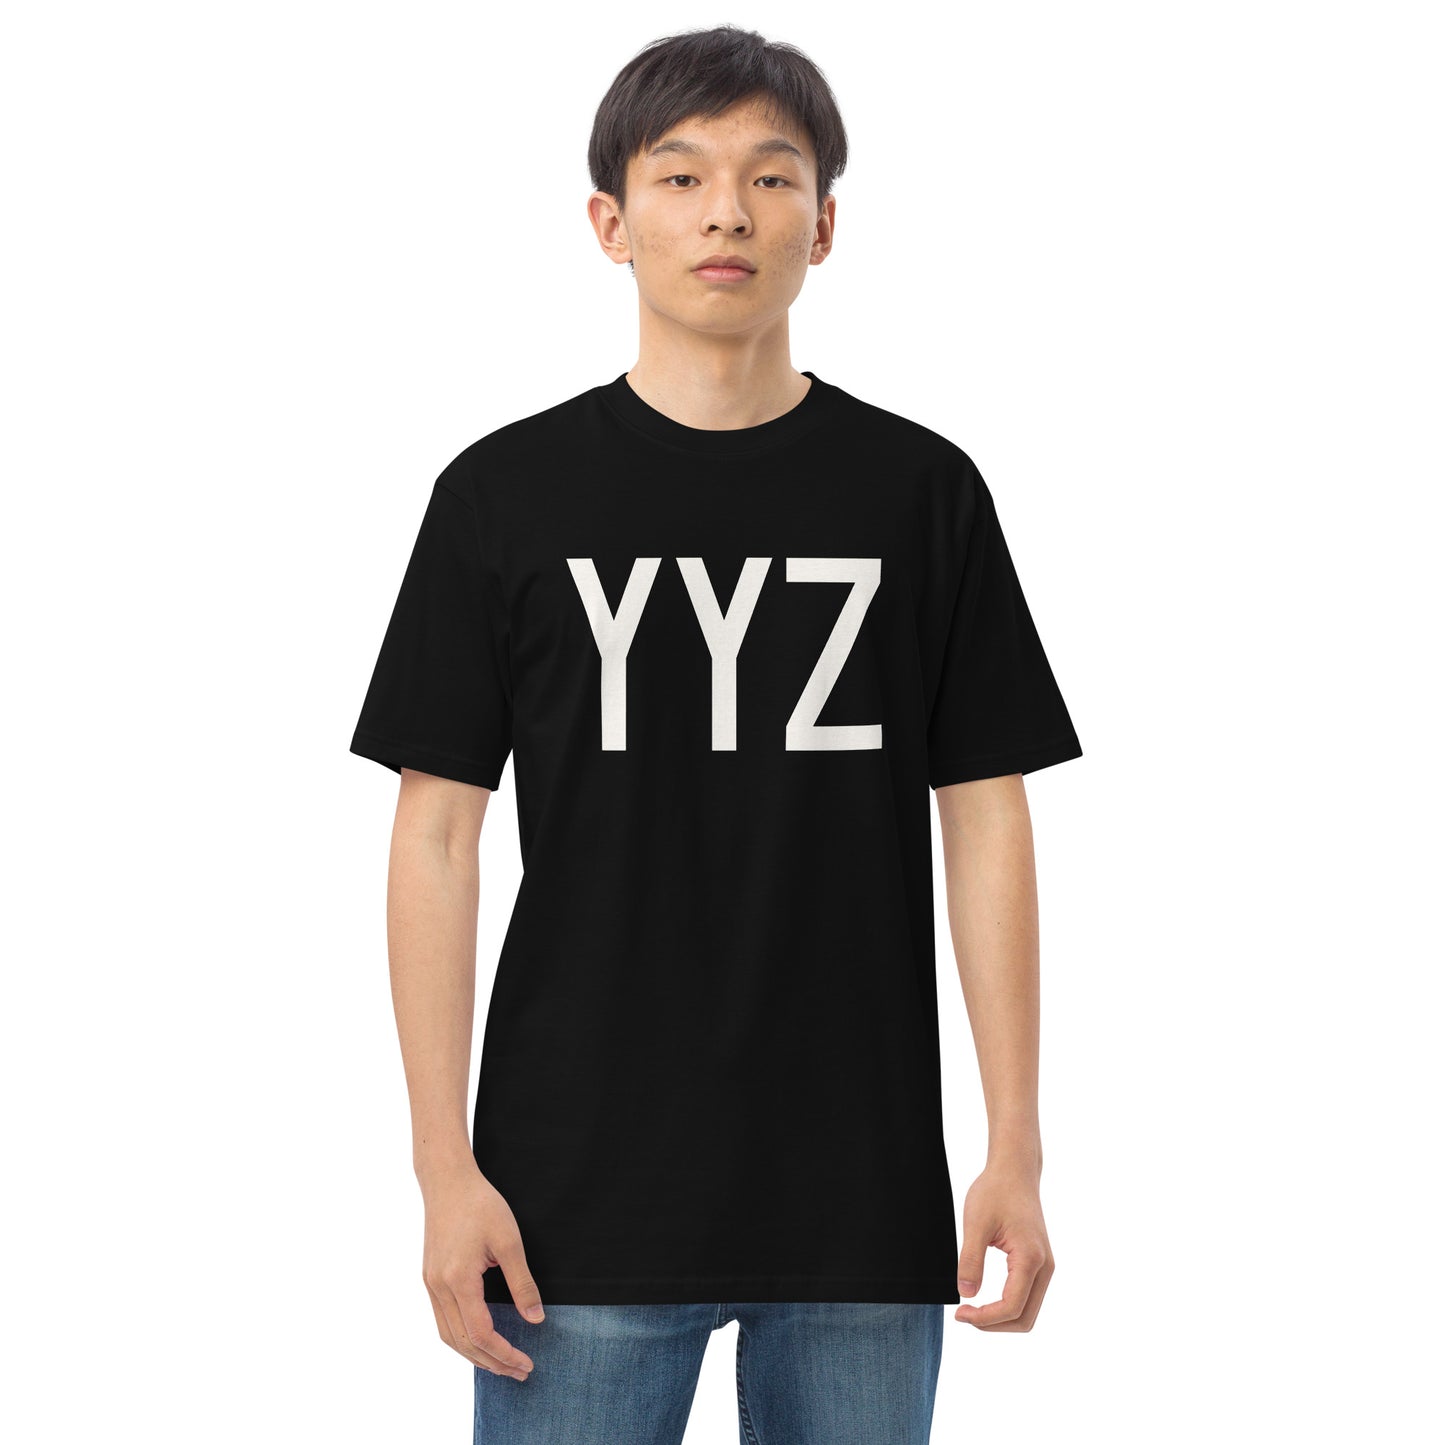 YYZ Toronto Ontario Men's Premium Heavyweight T-Shirt